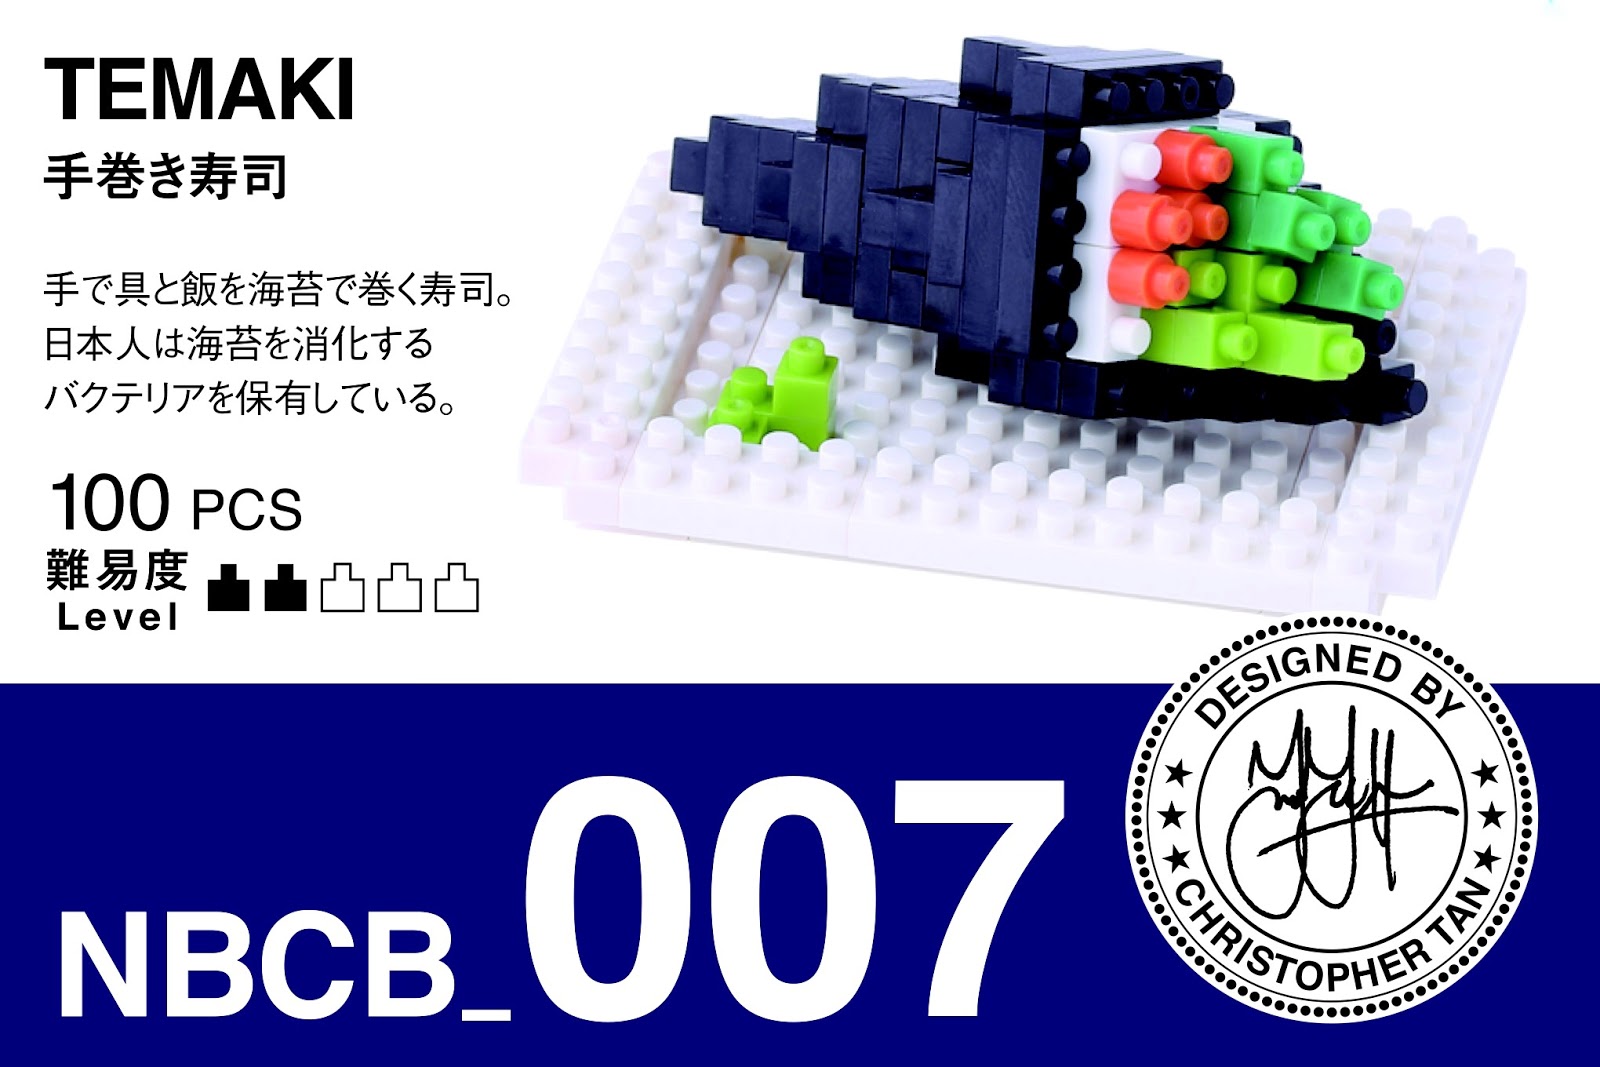 nanoblock NBCB_008 Bento designed by Christopher Tan